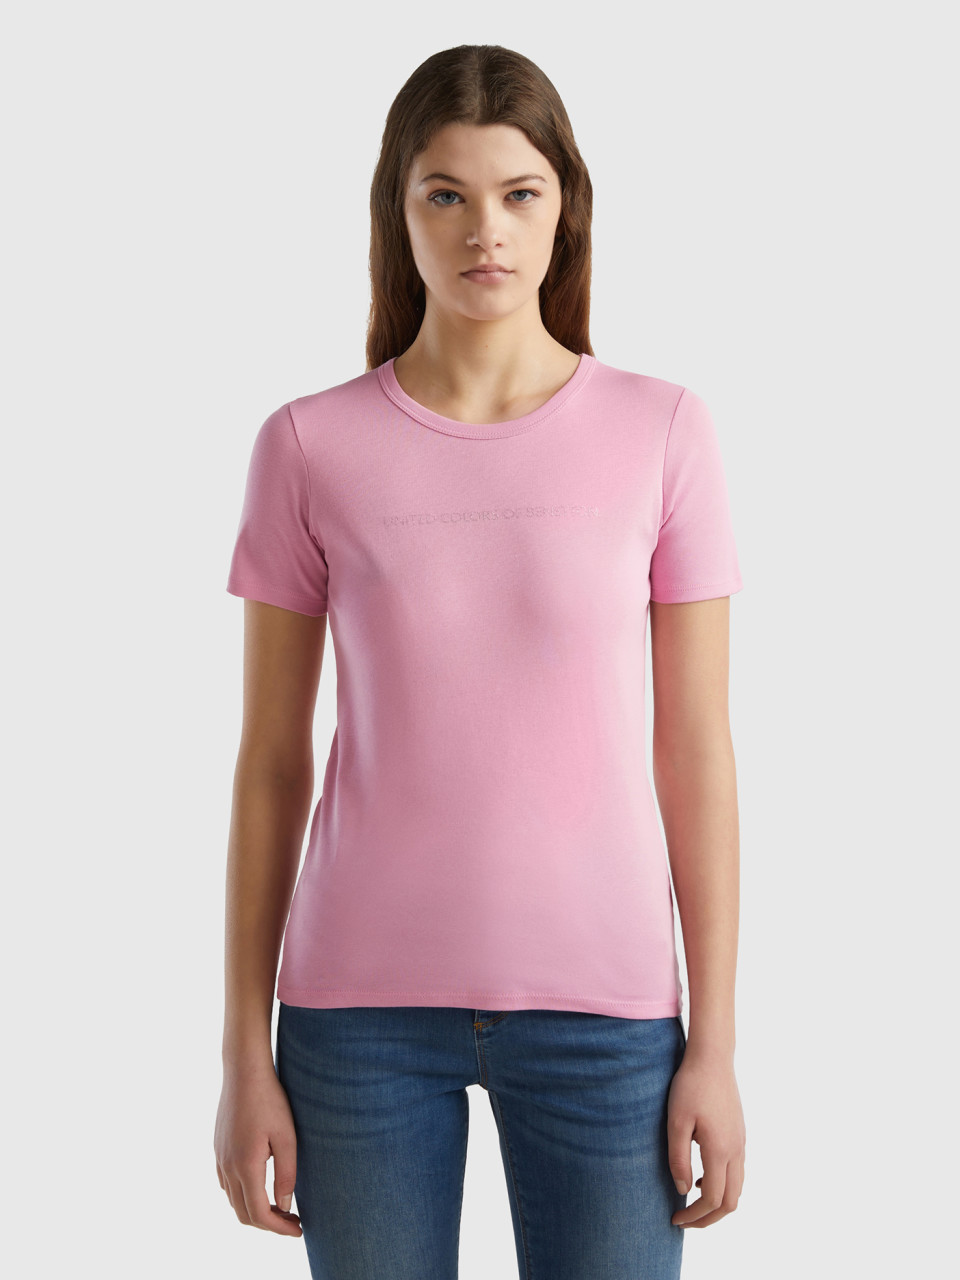 Benetton, T-shirt In 100% Cotton With Glitter Print Logo, Pastel Pink, Women